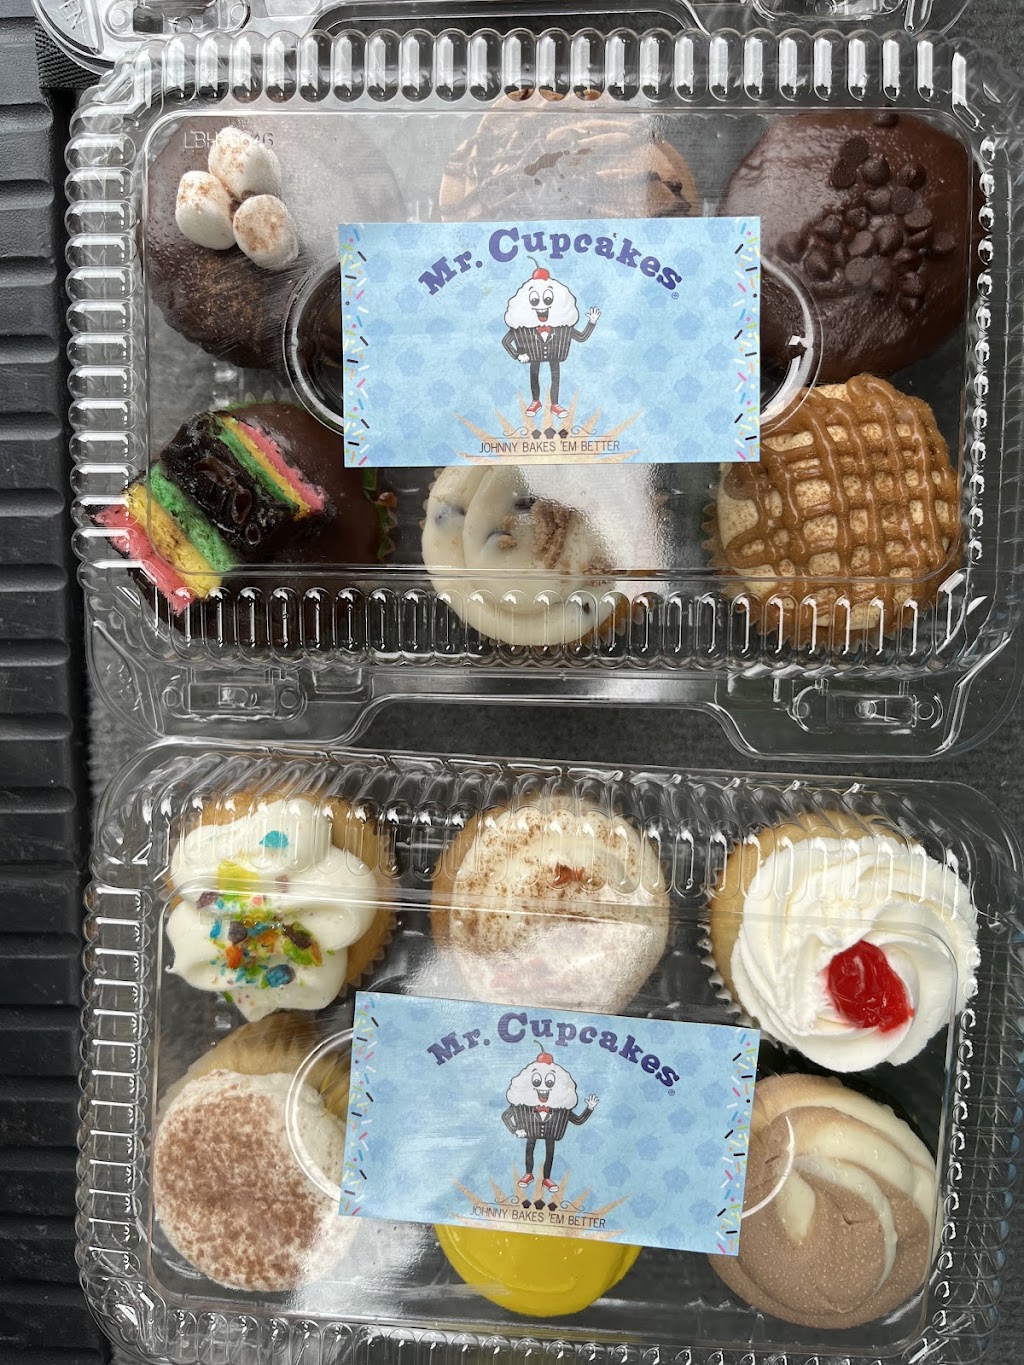 Mr. Cupcakes | 515 Brick Blvd, Brick Township, NJ 08723 | Phone: (732) 889-8430